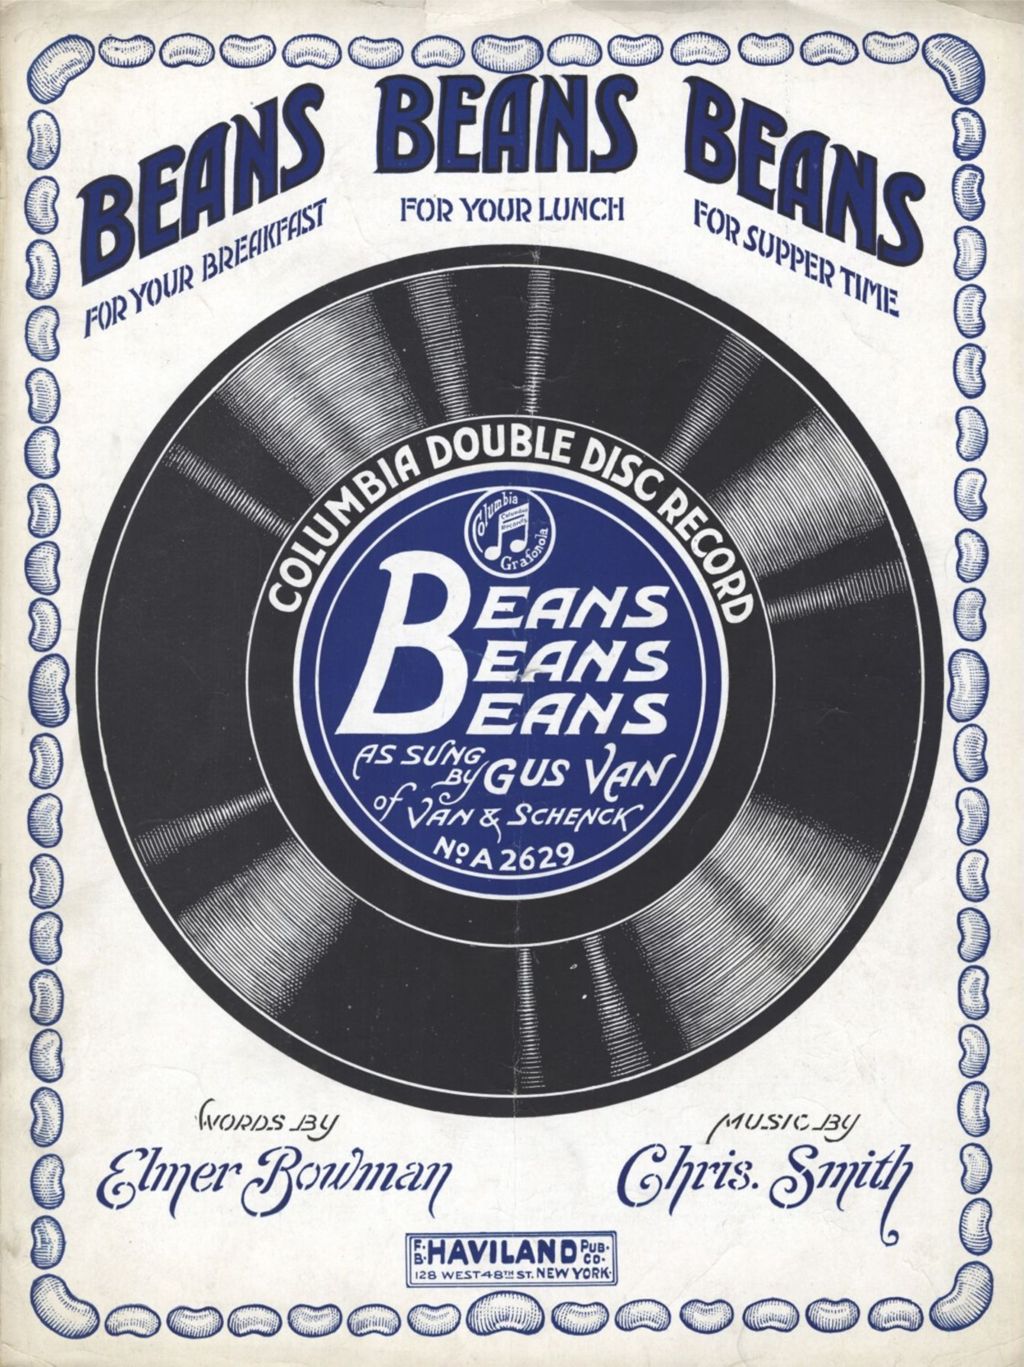 Miniature of Beans! Beans!! Beans!!!